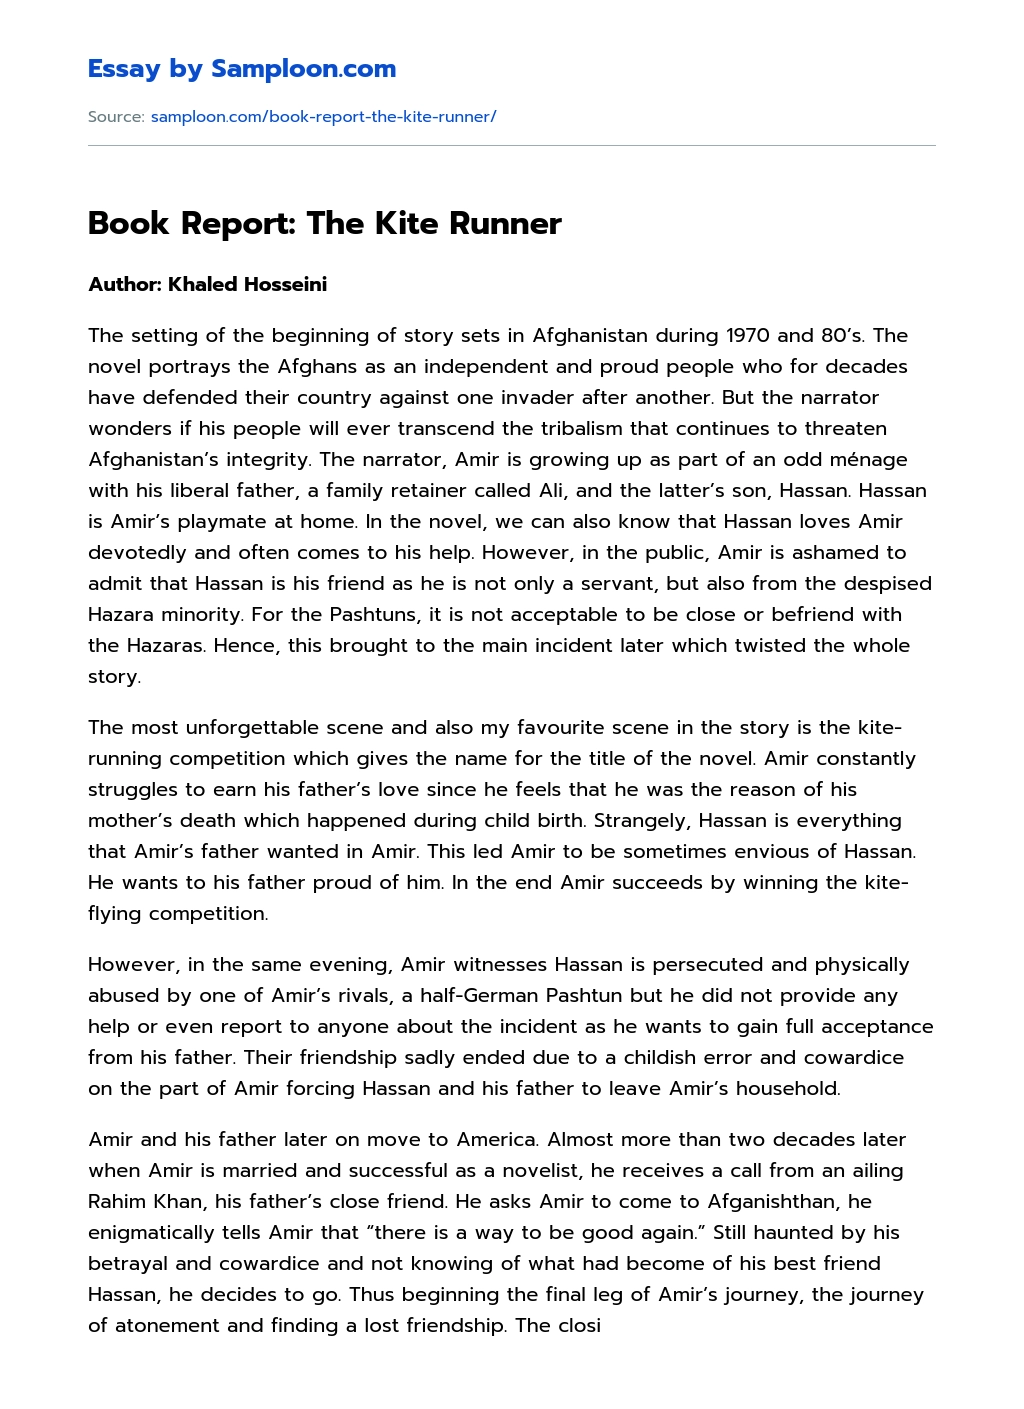 Book Report: The Kite Runner essay